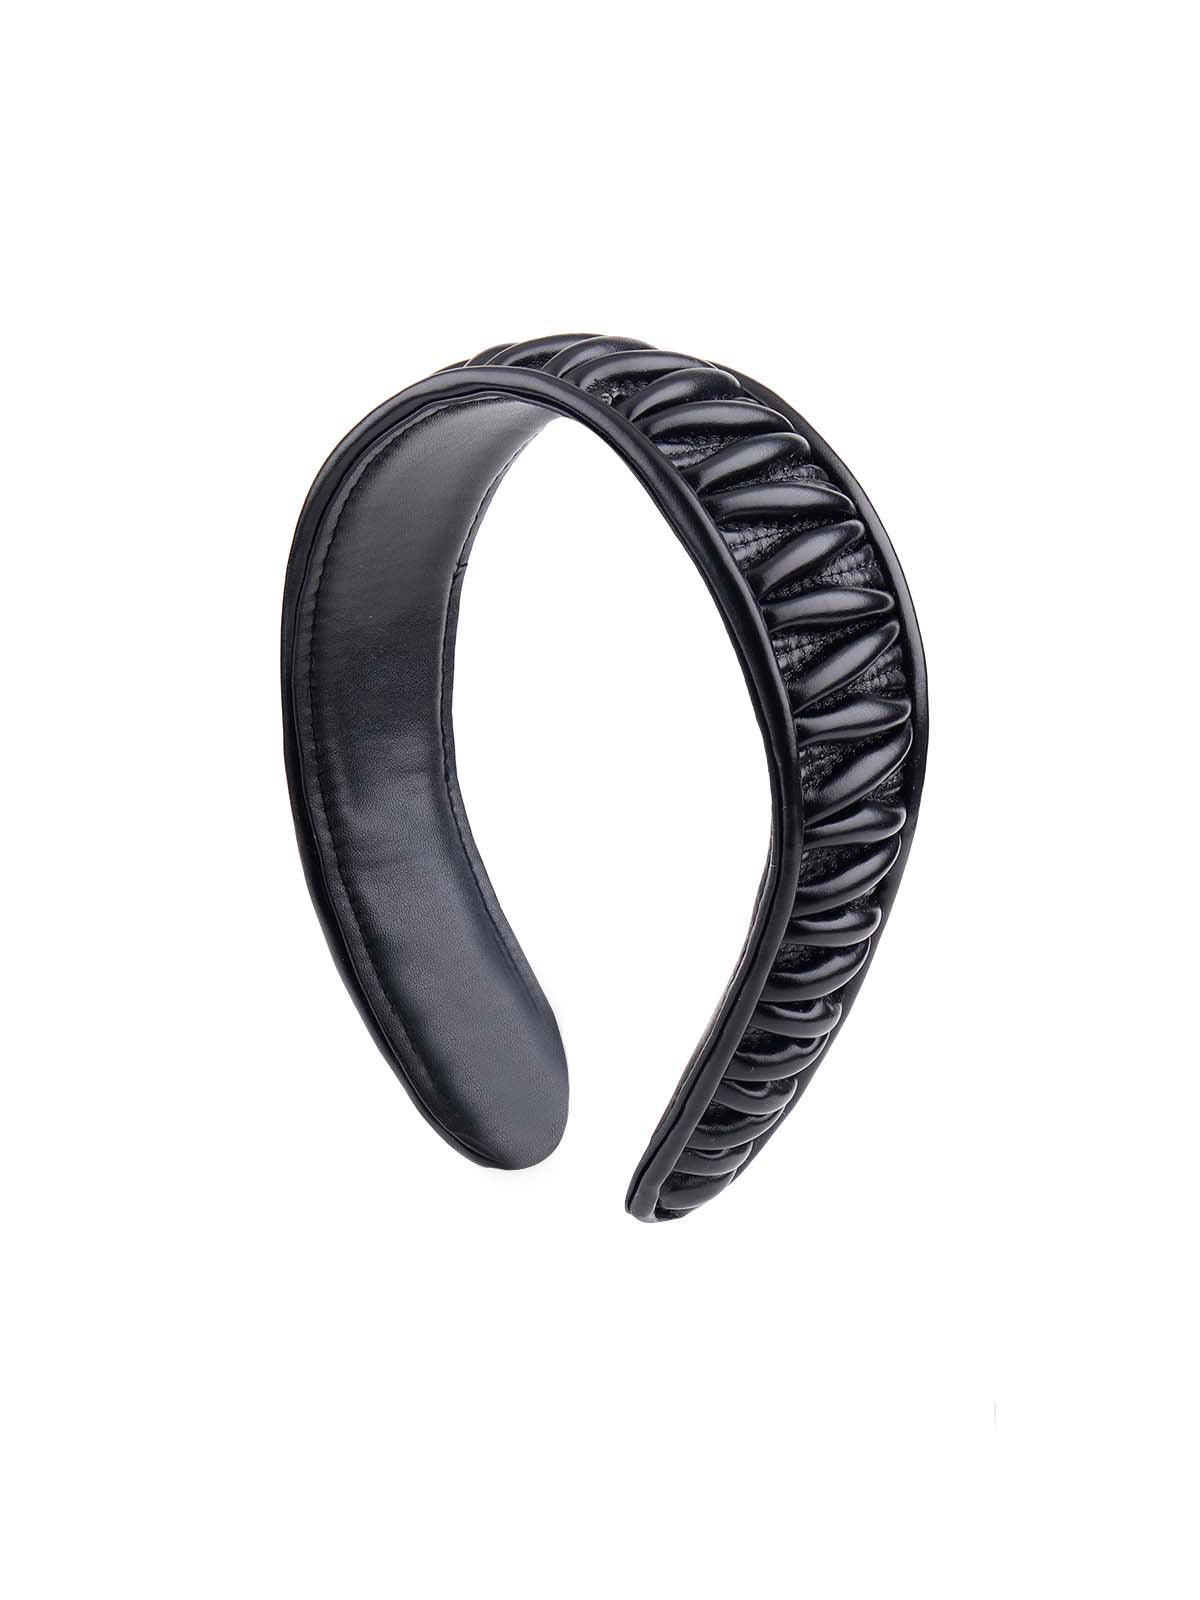 Black leatherette textured hairband - Odette